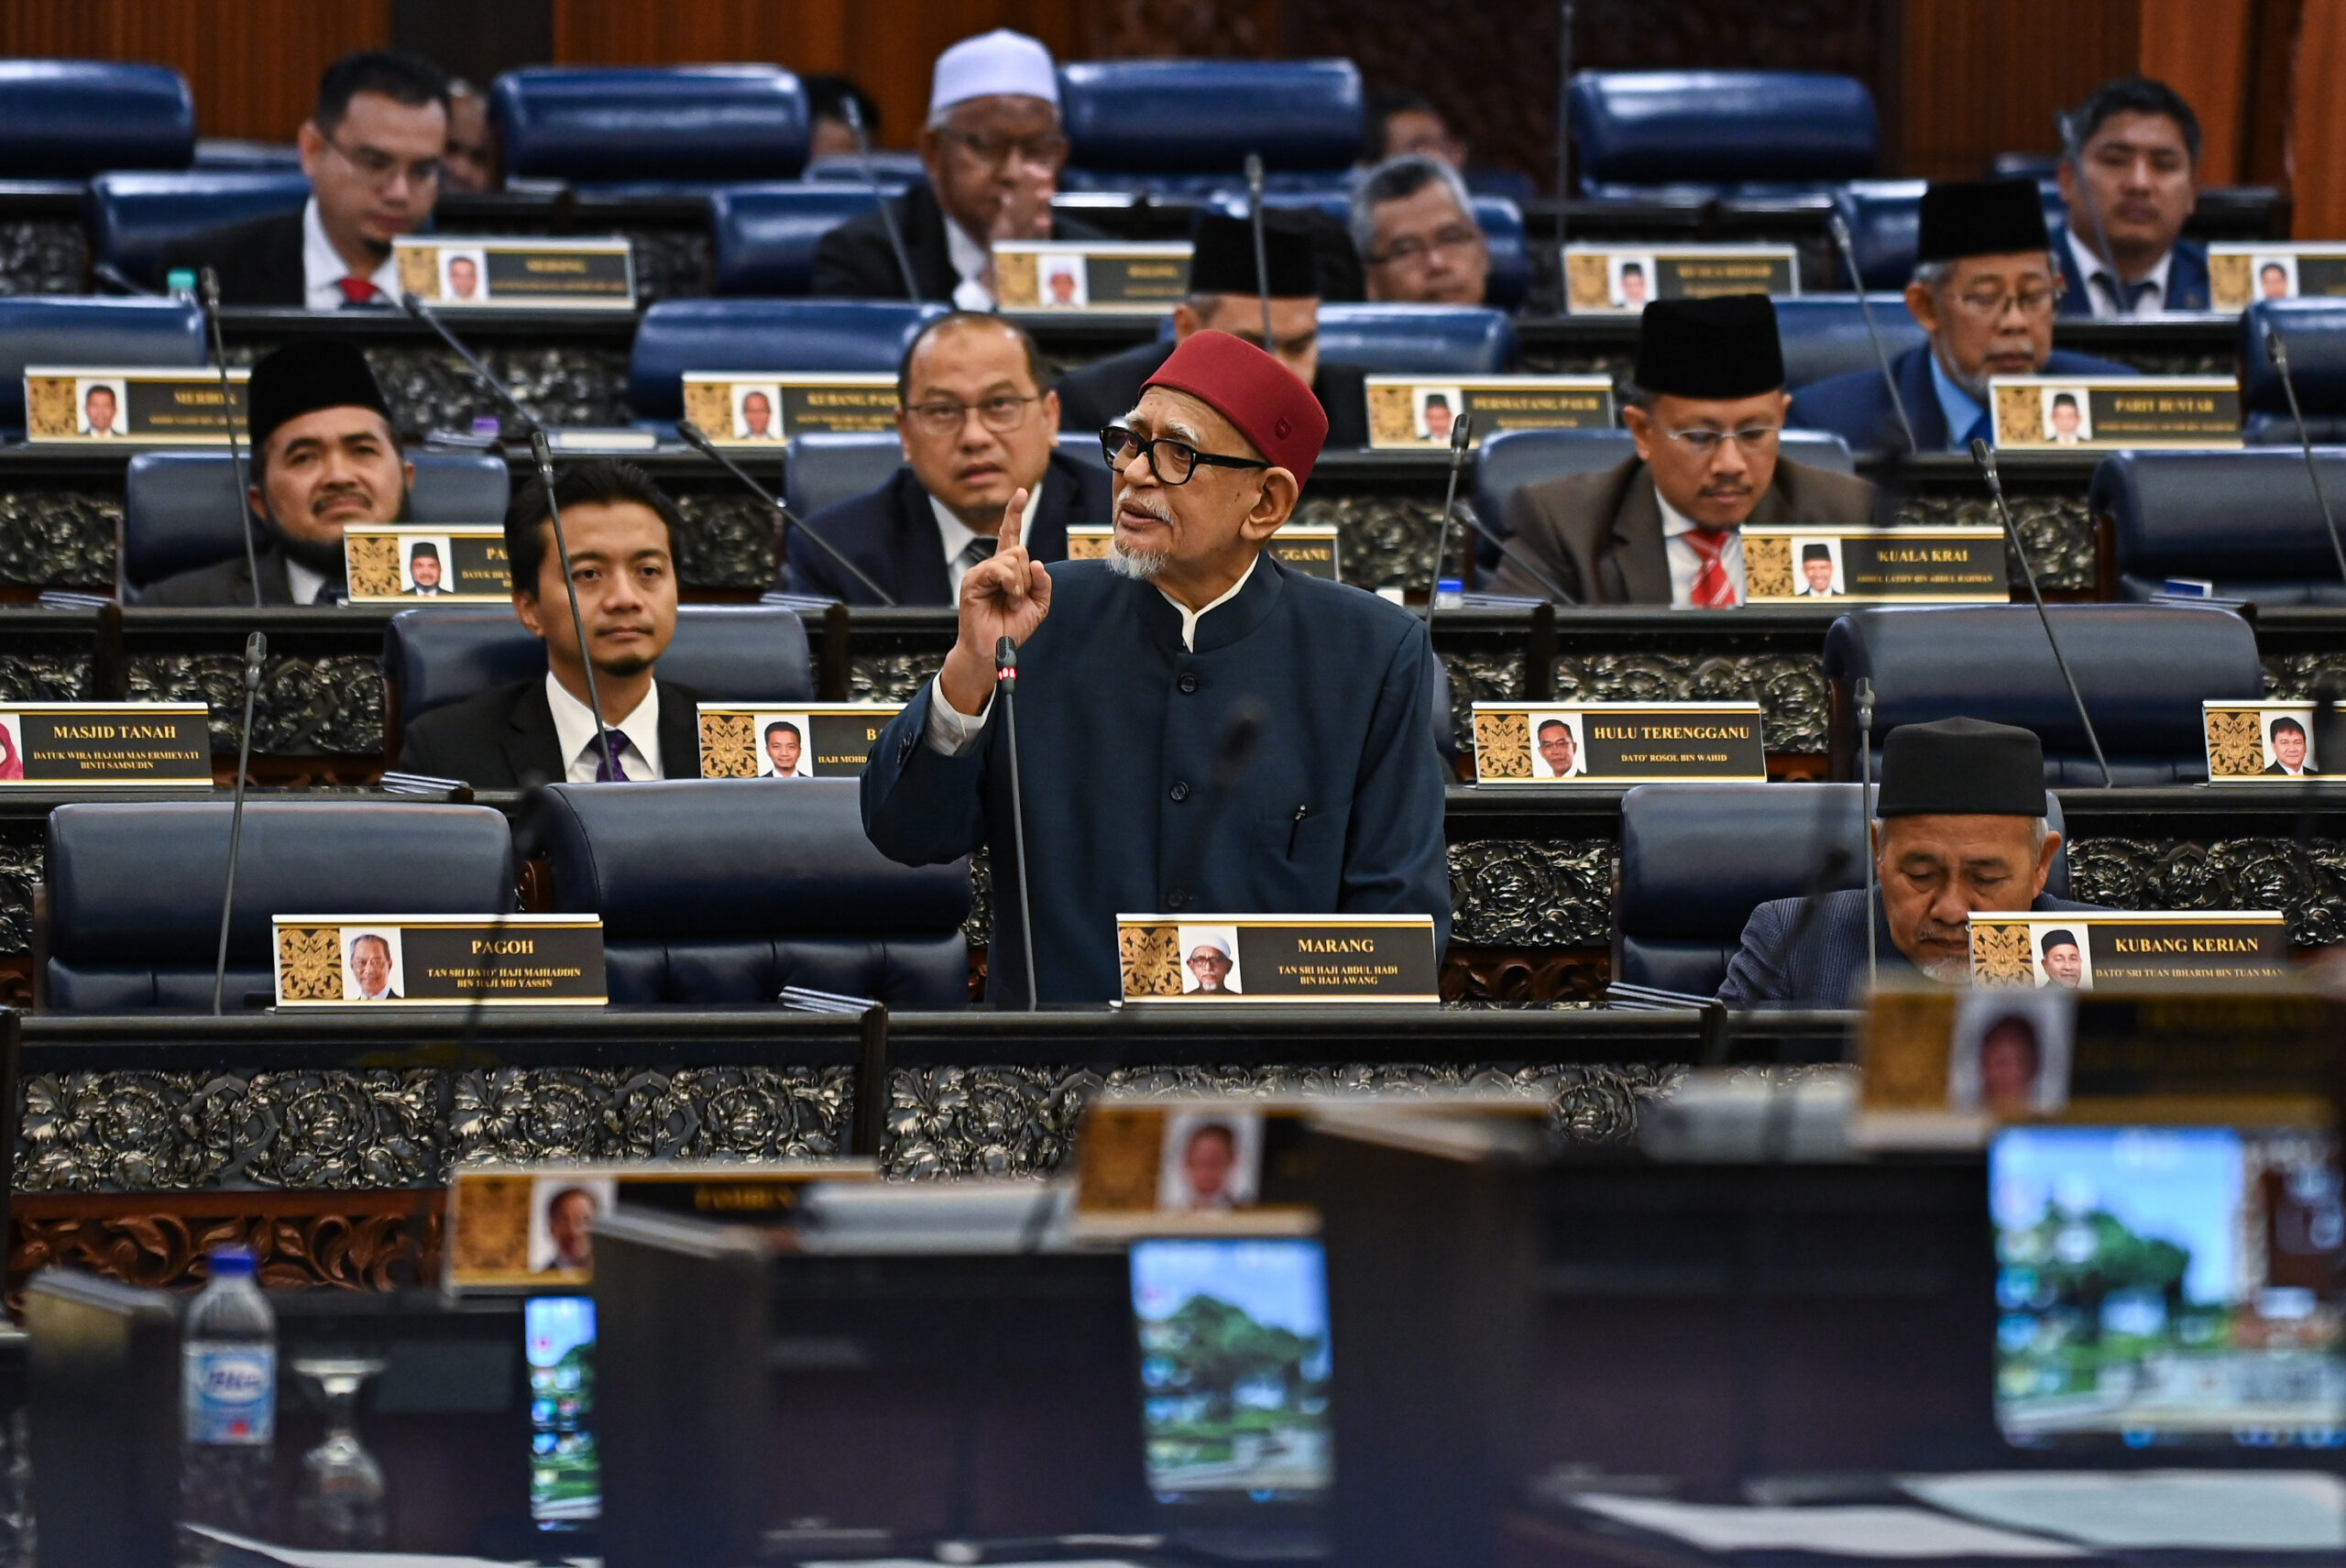 Govt leaders merely ‘burung tiung’ echoing their master, says Hadi